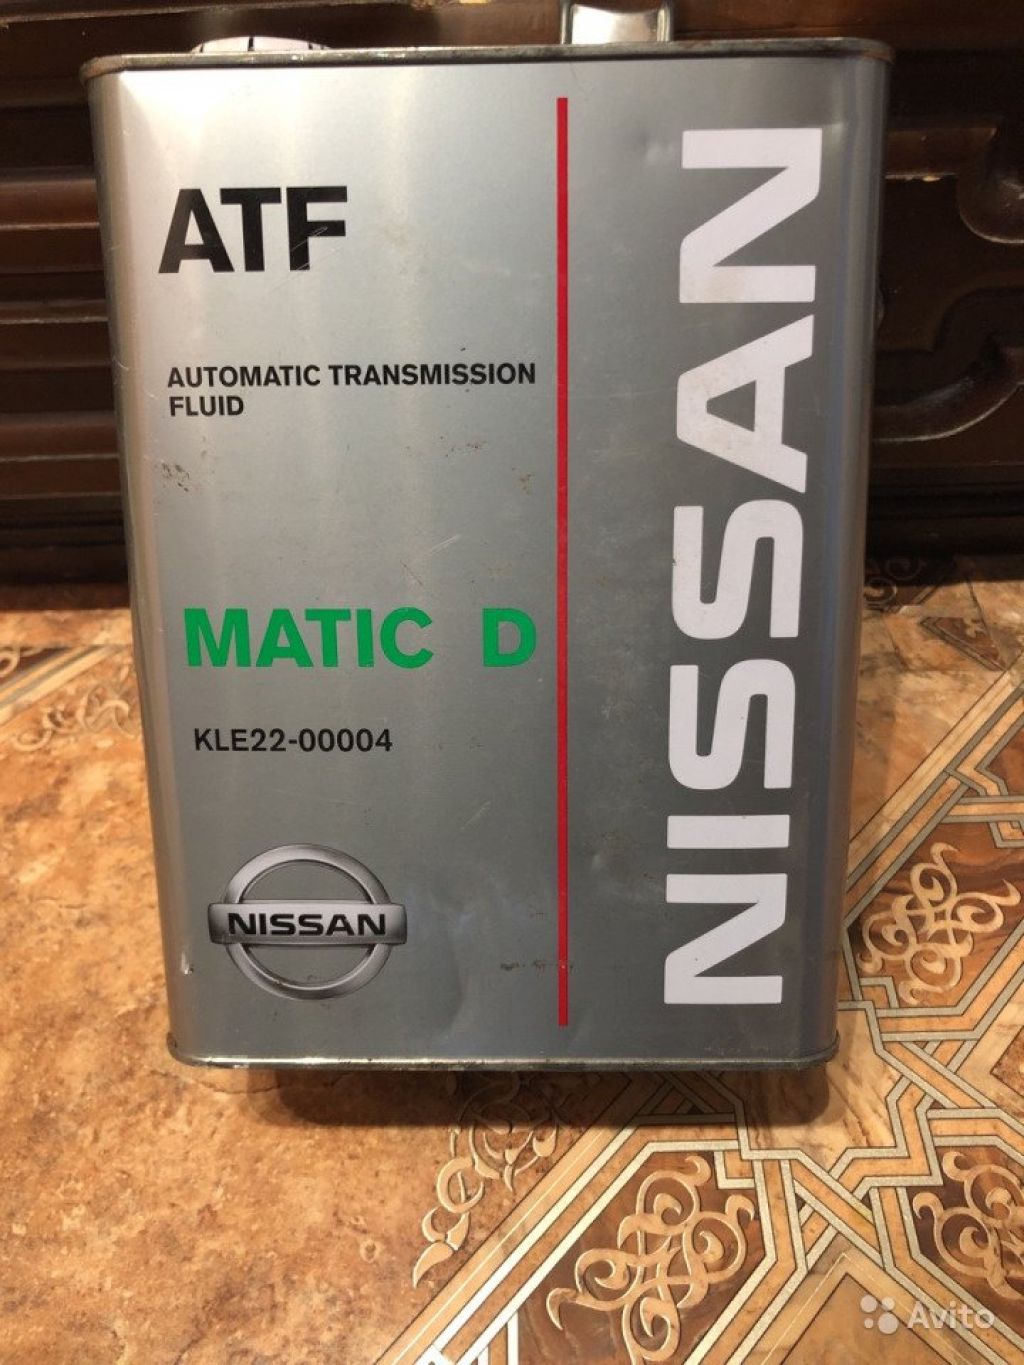 Масло matic d. Nissan ATF matic d (артикул 4л — kle22-00004). Nissan ATF matic d. Nissan kle22-00004. Nissan matic d ATF артикул.